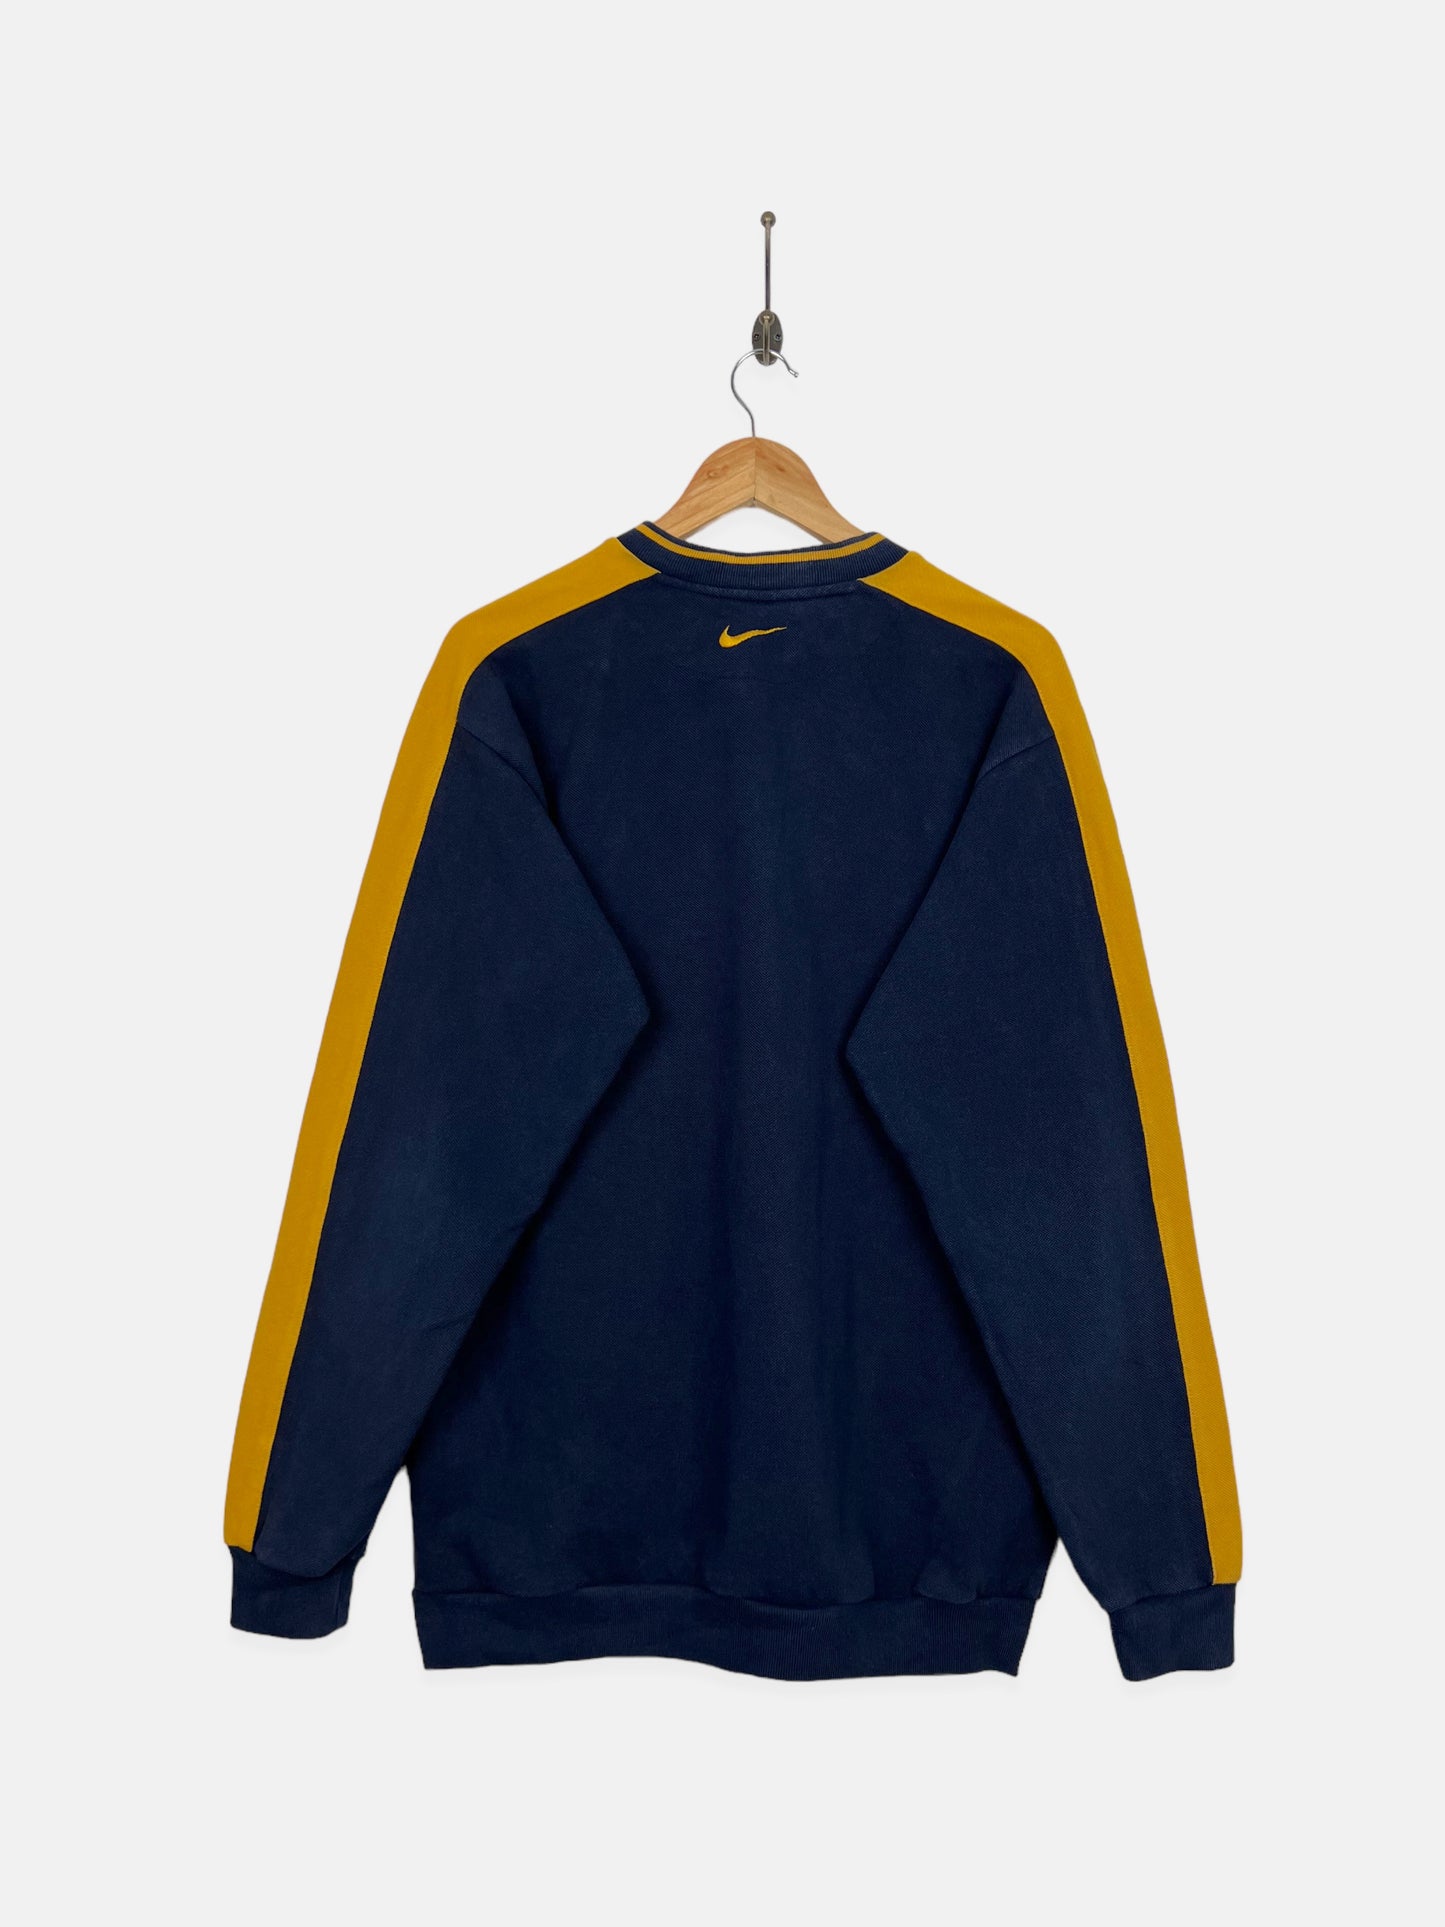 90's Nike Embroidered Vintage Sweatshirt Size M